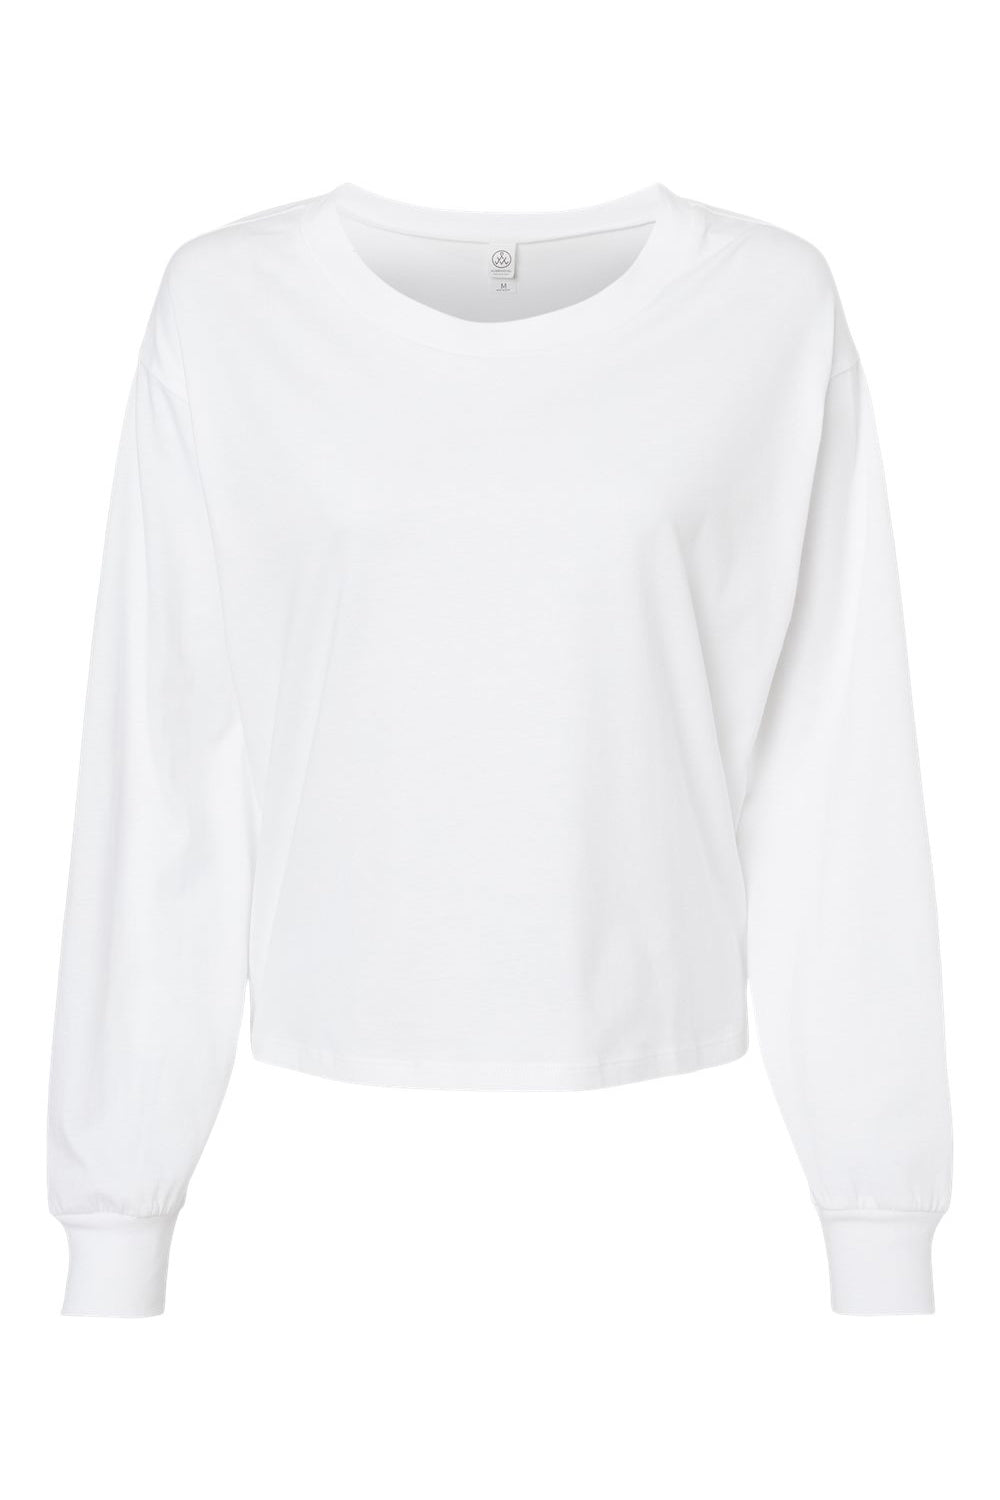 Alternative 1176 Womens Cropped Long Sleeve Crewneck T-Shirt White Flat Front